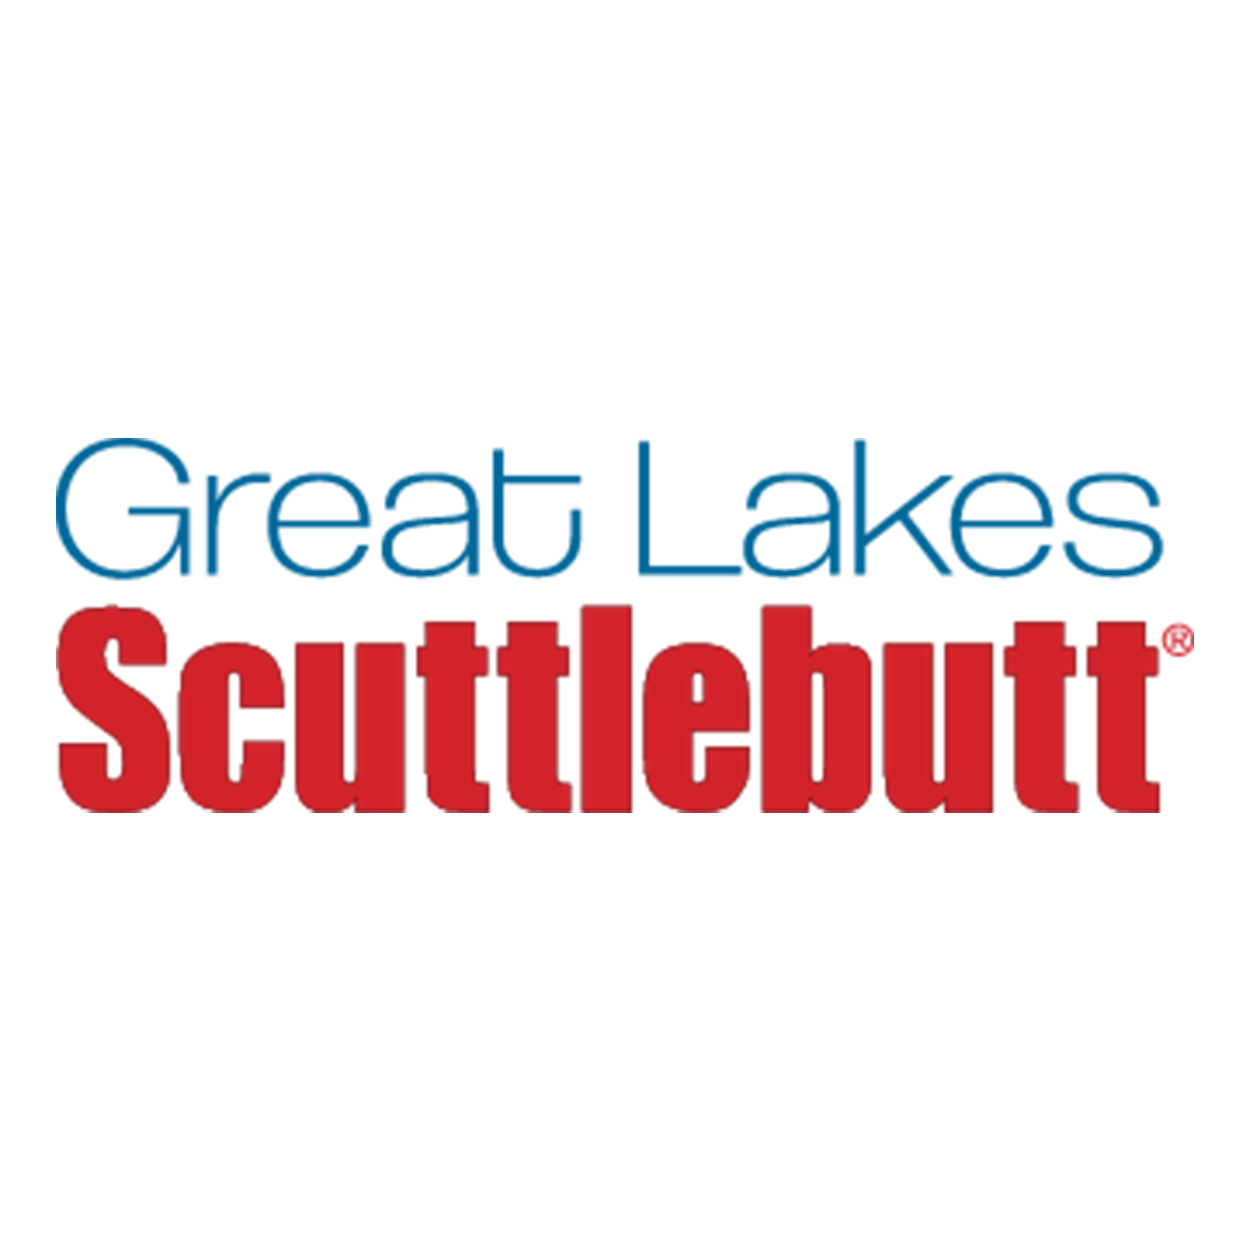 Great Lakes Scuttlebutt Magazine logo